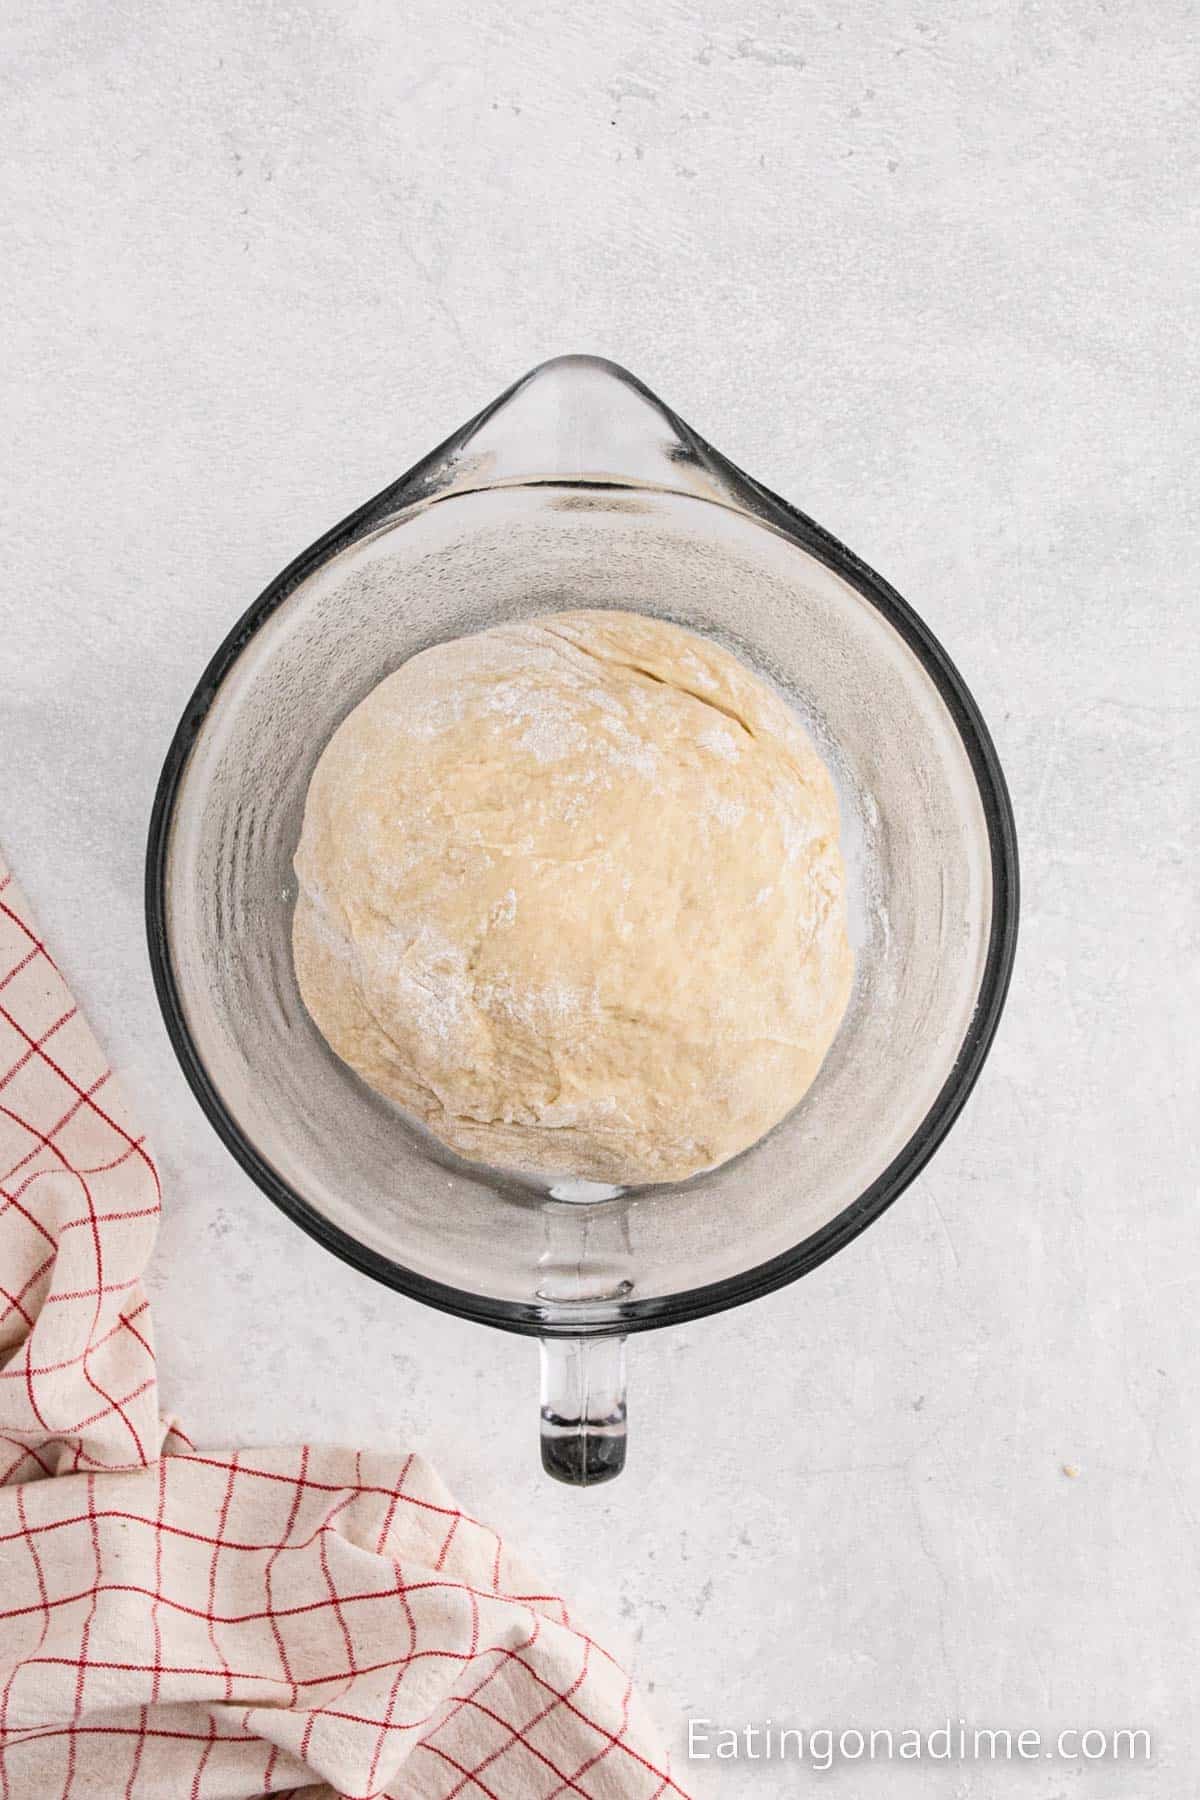 Homemade dough in a oiled bowl